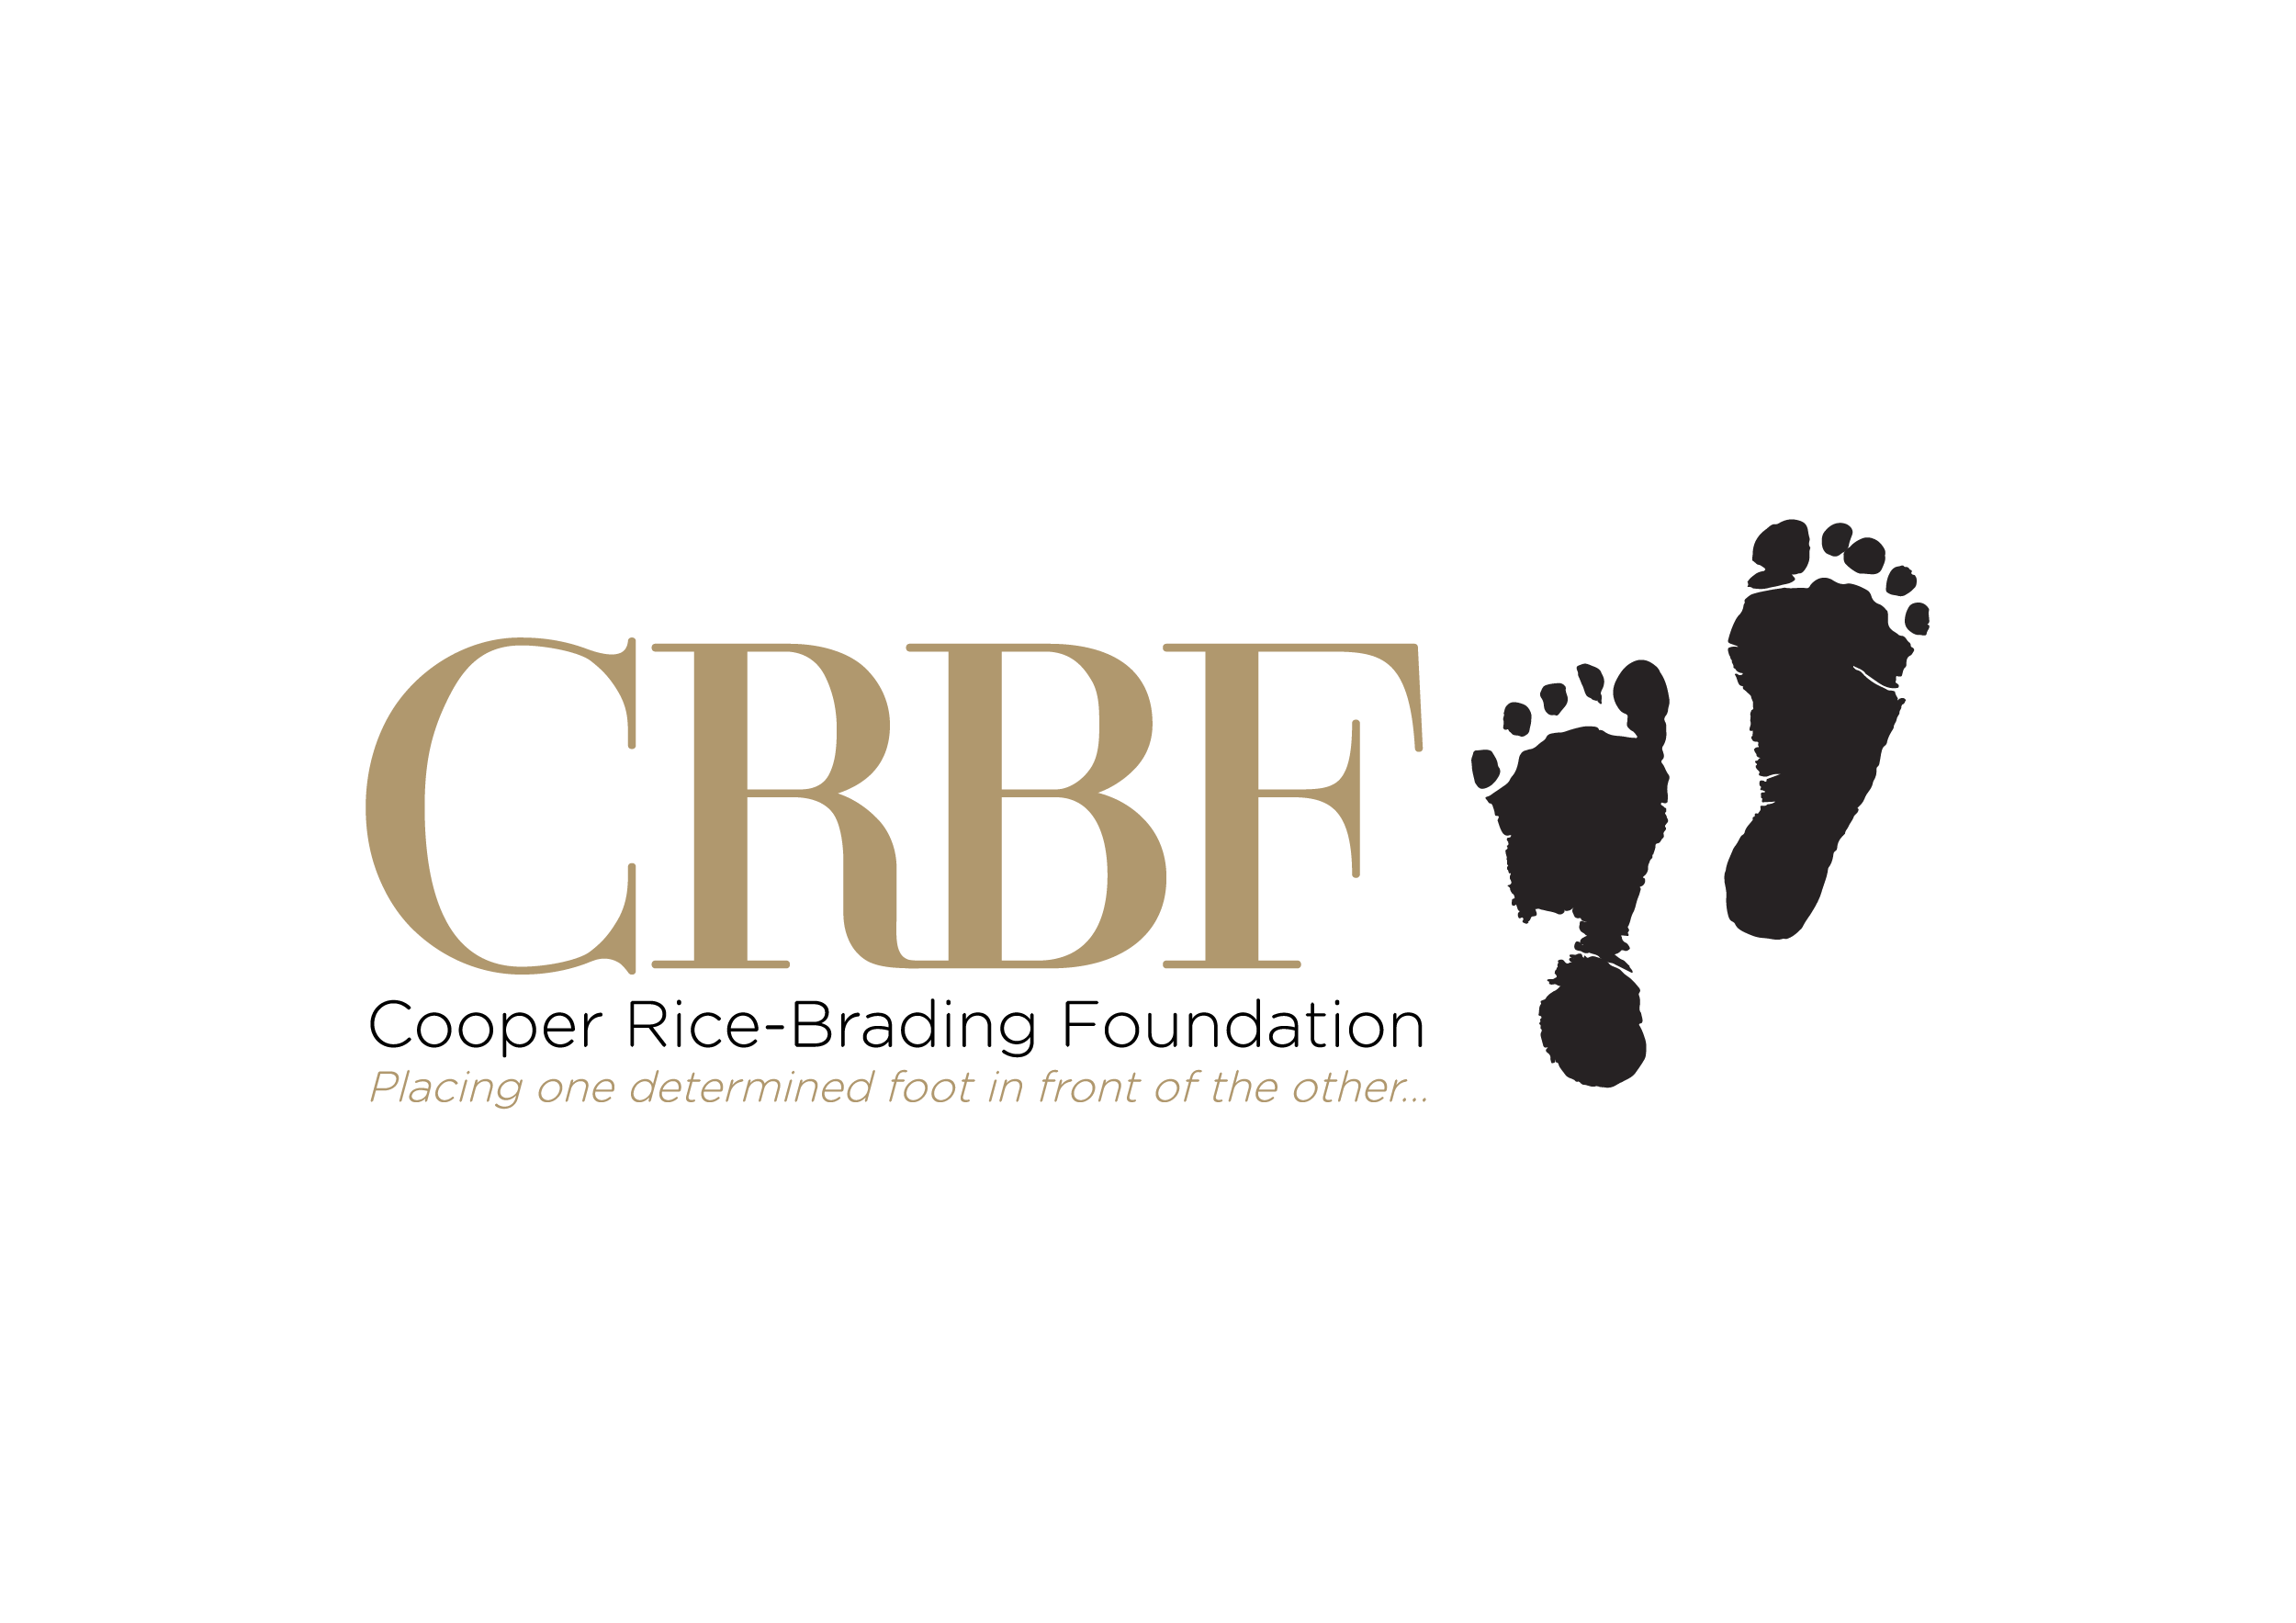 Cooper Rice-Brading Foundation logo